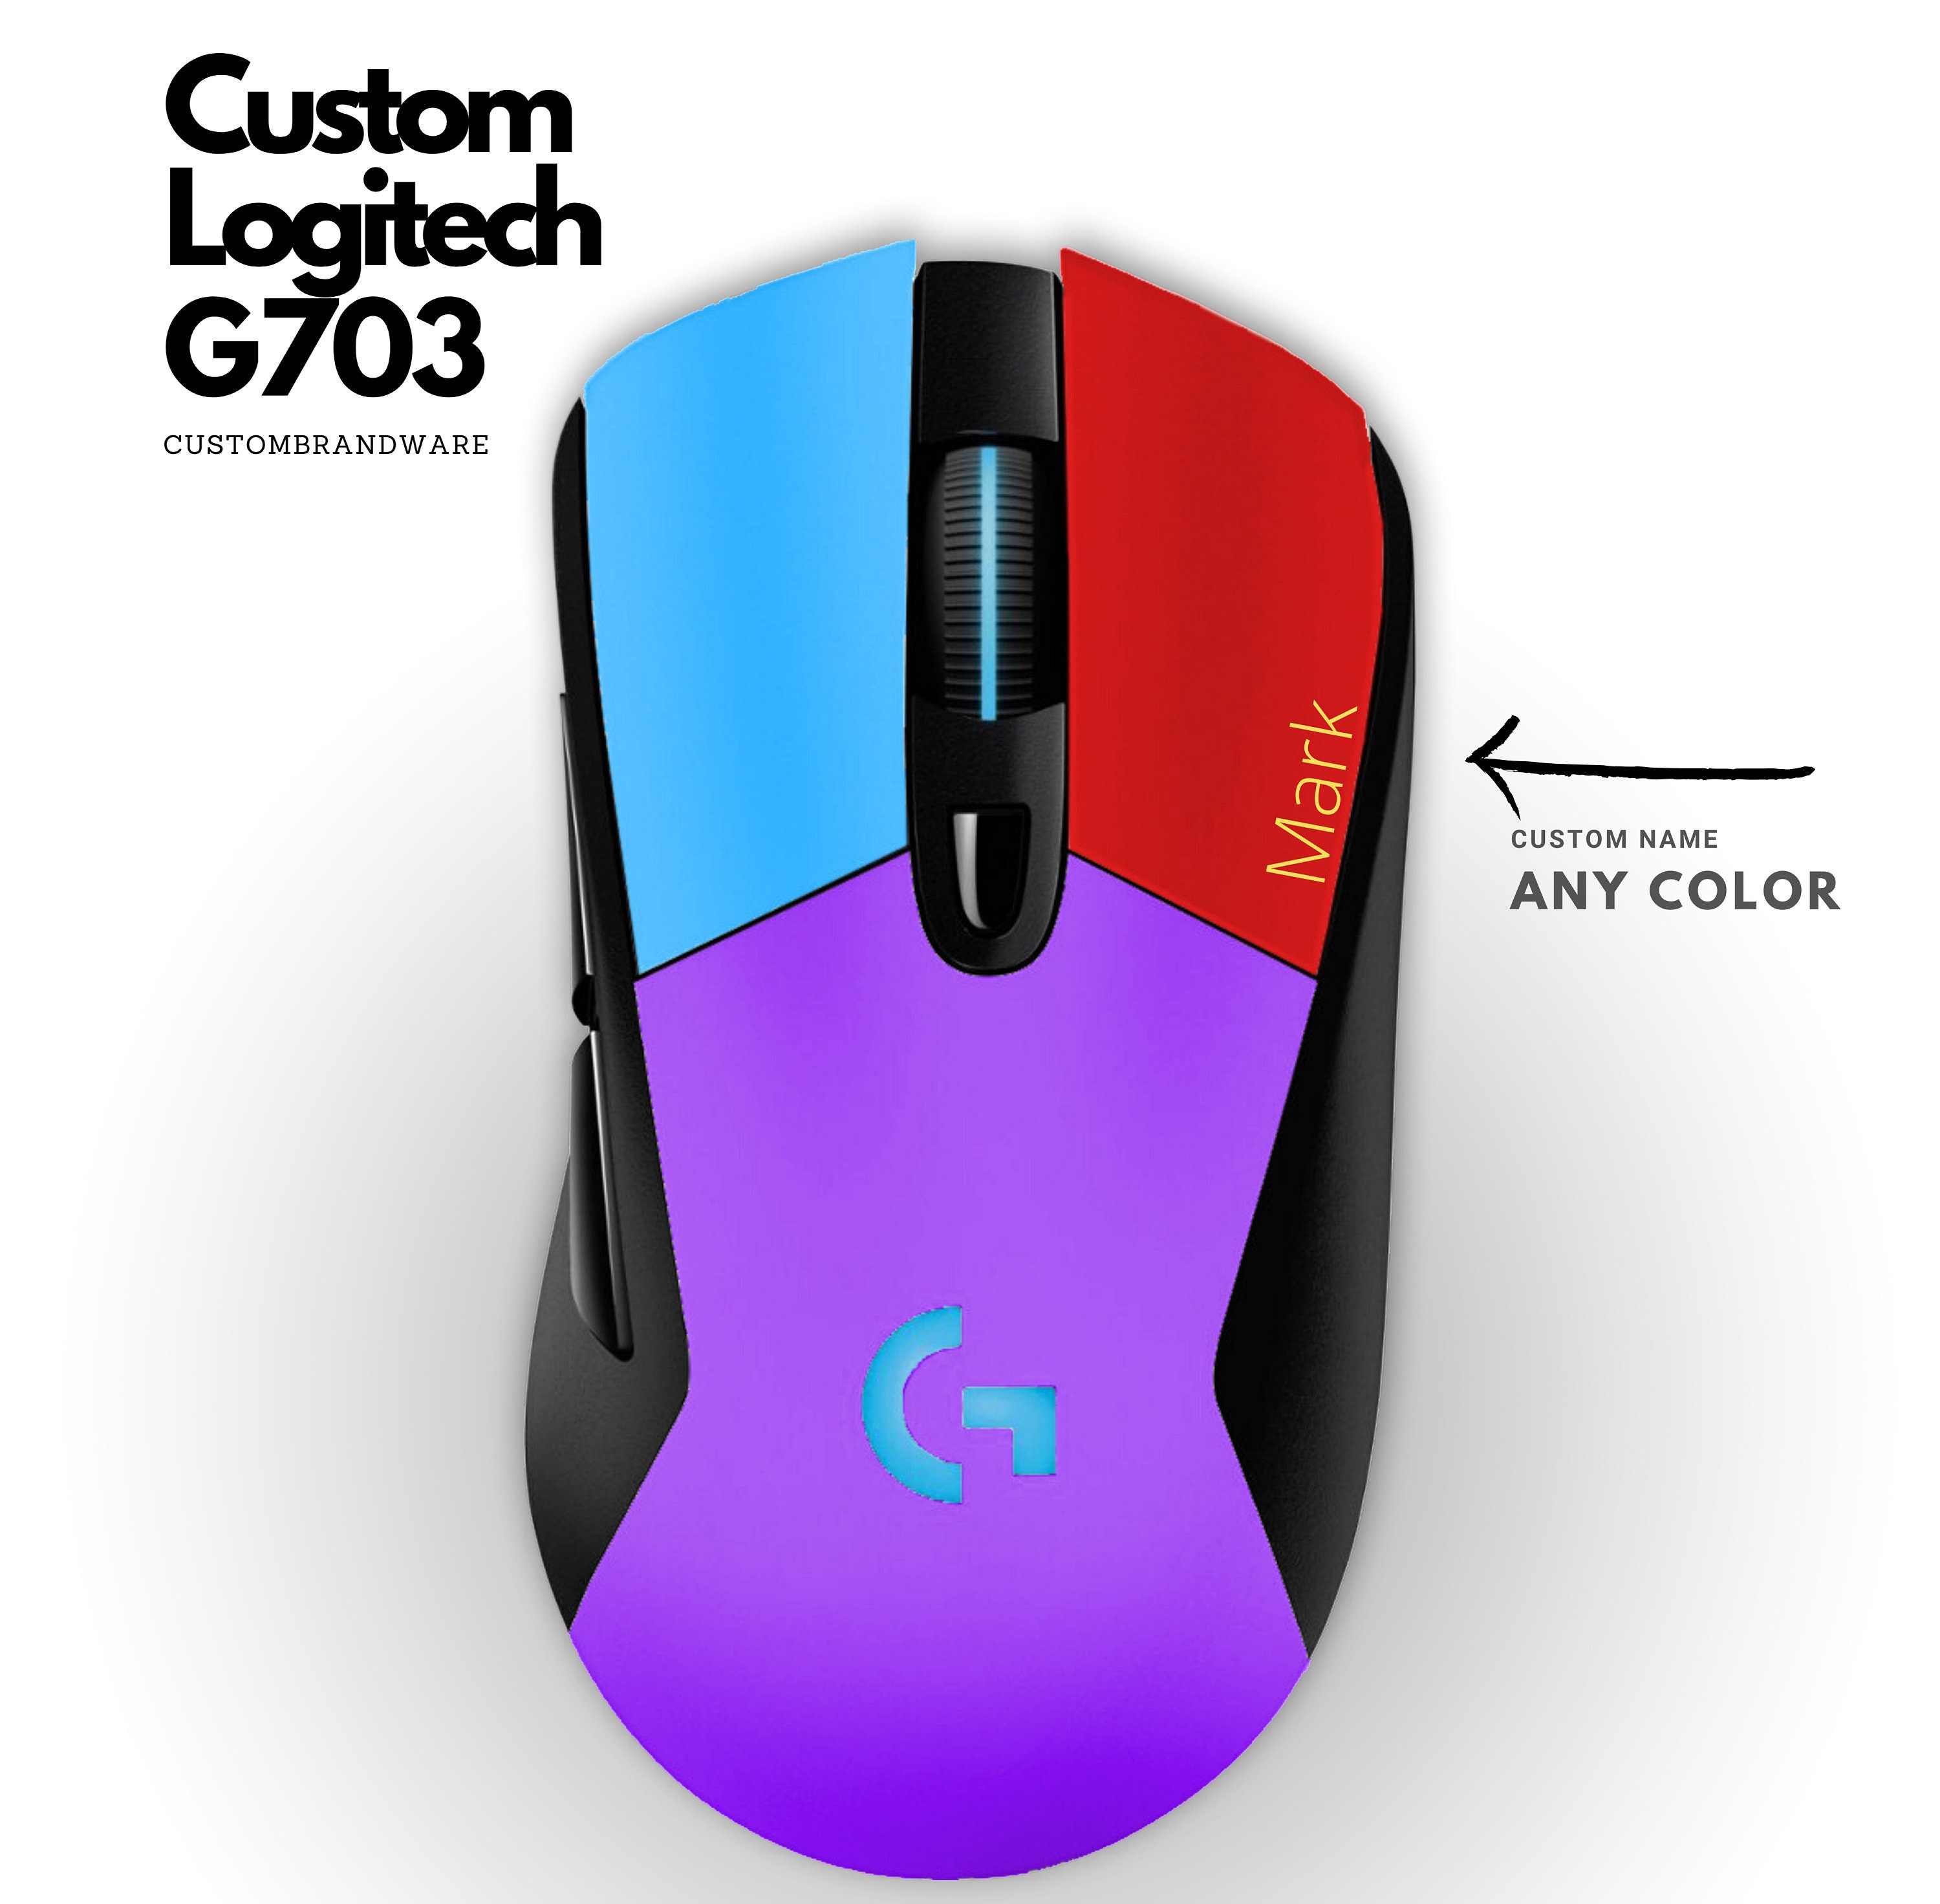 Logitech G502 Hero Printstream Mouse Grip Tape Skins 